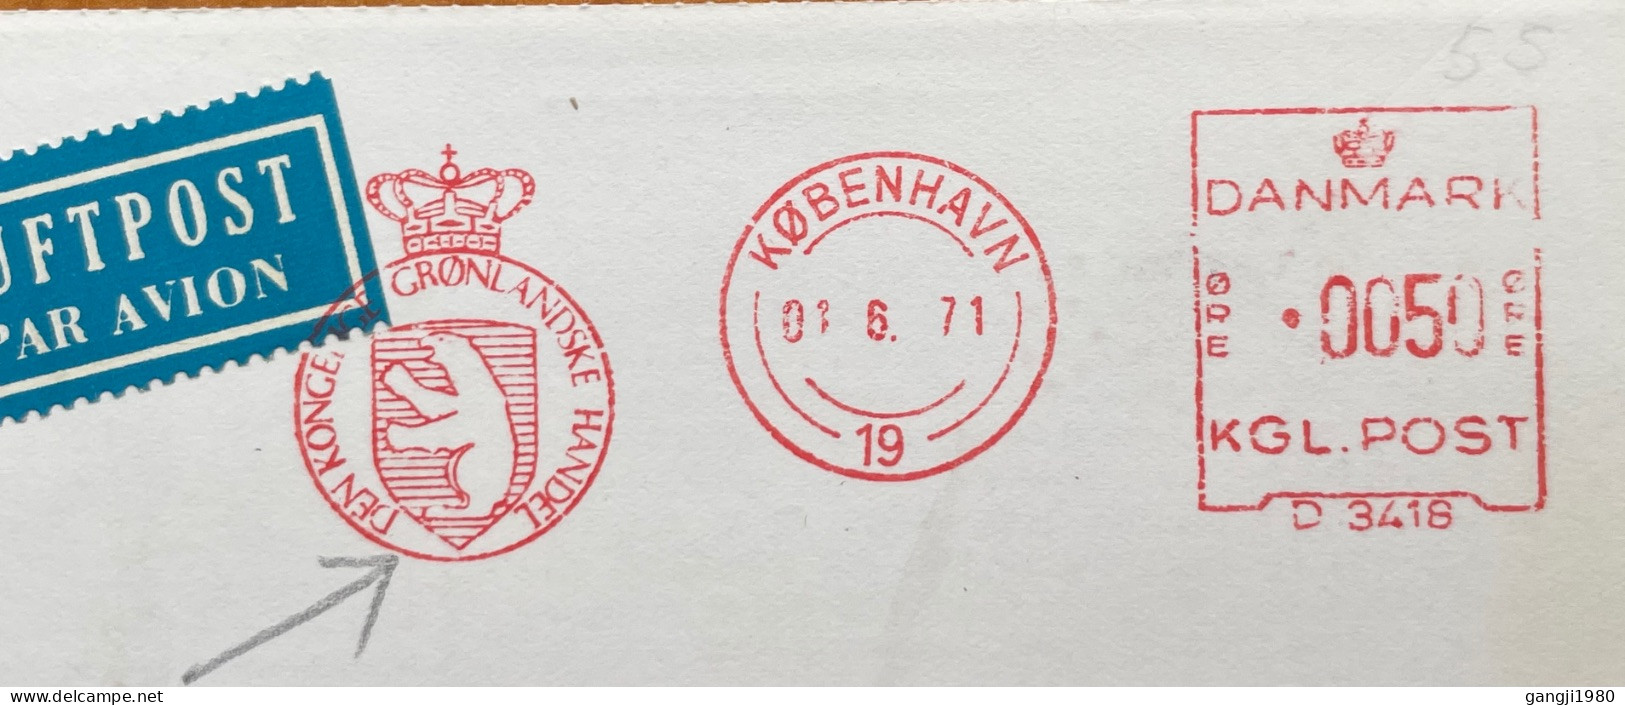 GREENLAND-DENMARK 1971, MACHINE SLOGAN, BEAR ANIMAL, METER SLOGAN ON PHILATELIC INFORMATION CARD, USED TO USA. - Lettres & Documents